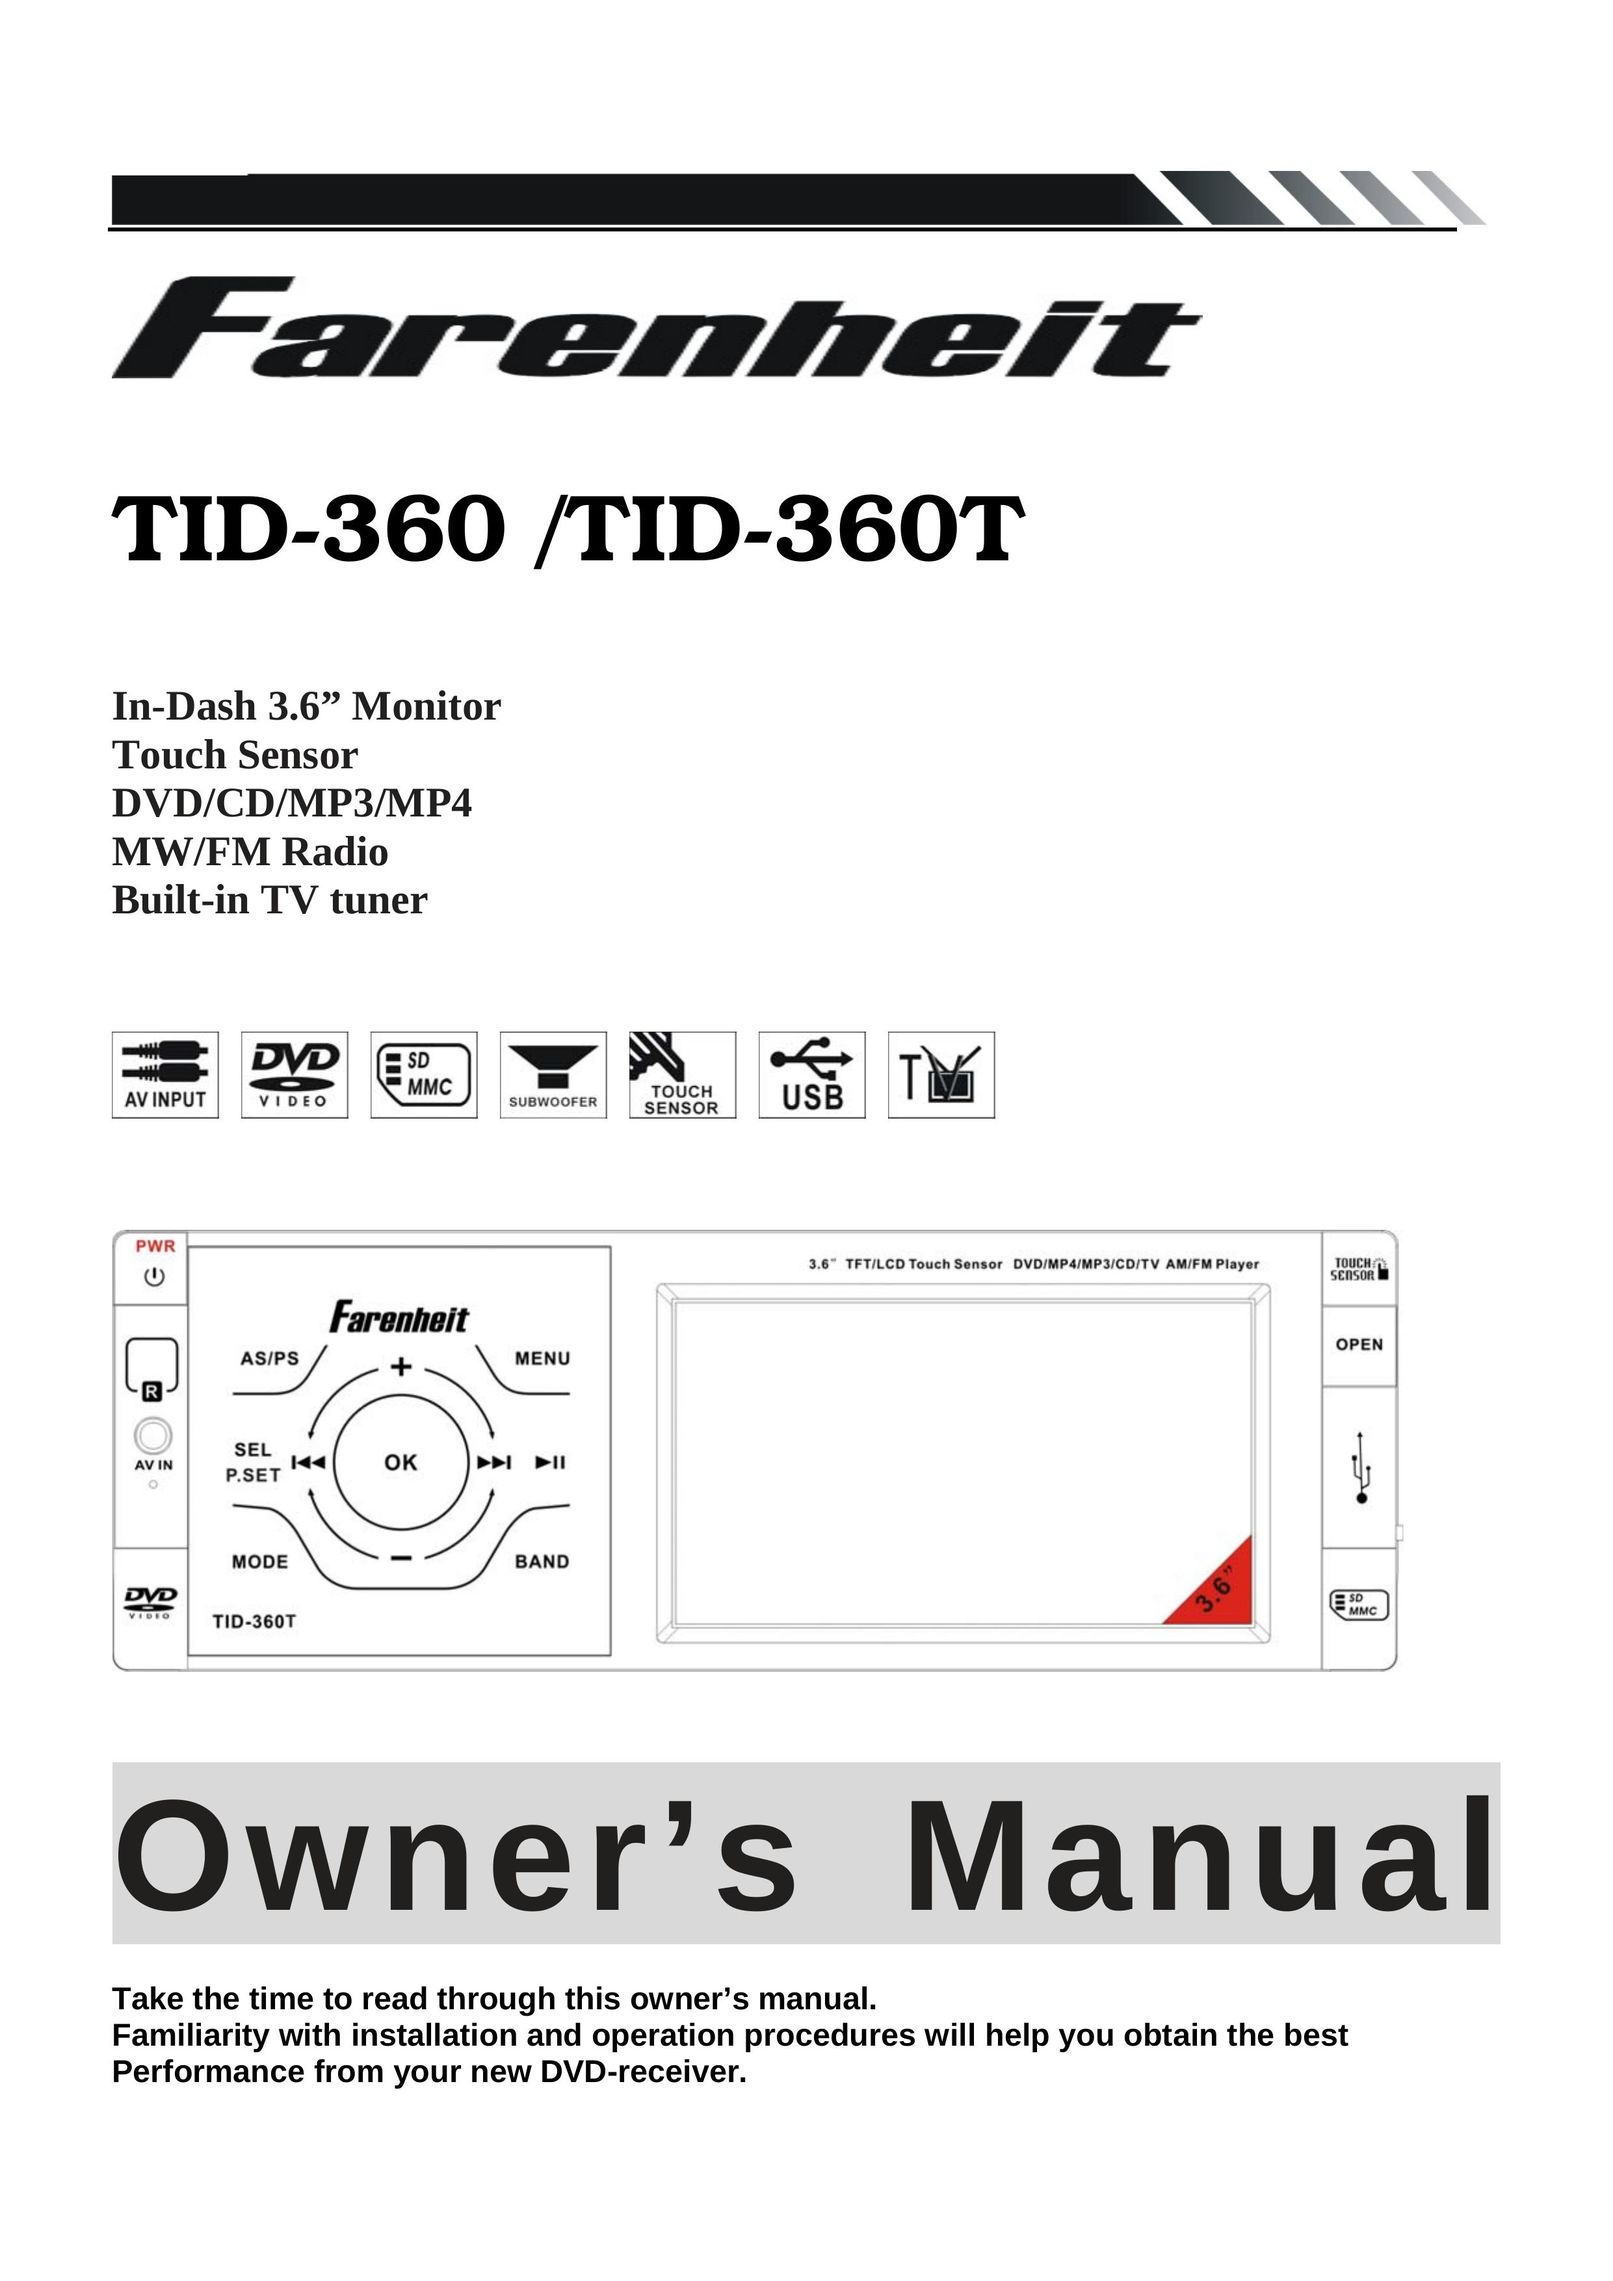 Farenheit Technologies TID-360 TV Receiver User Manual